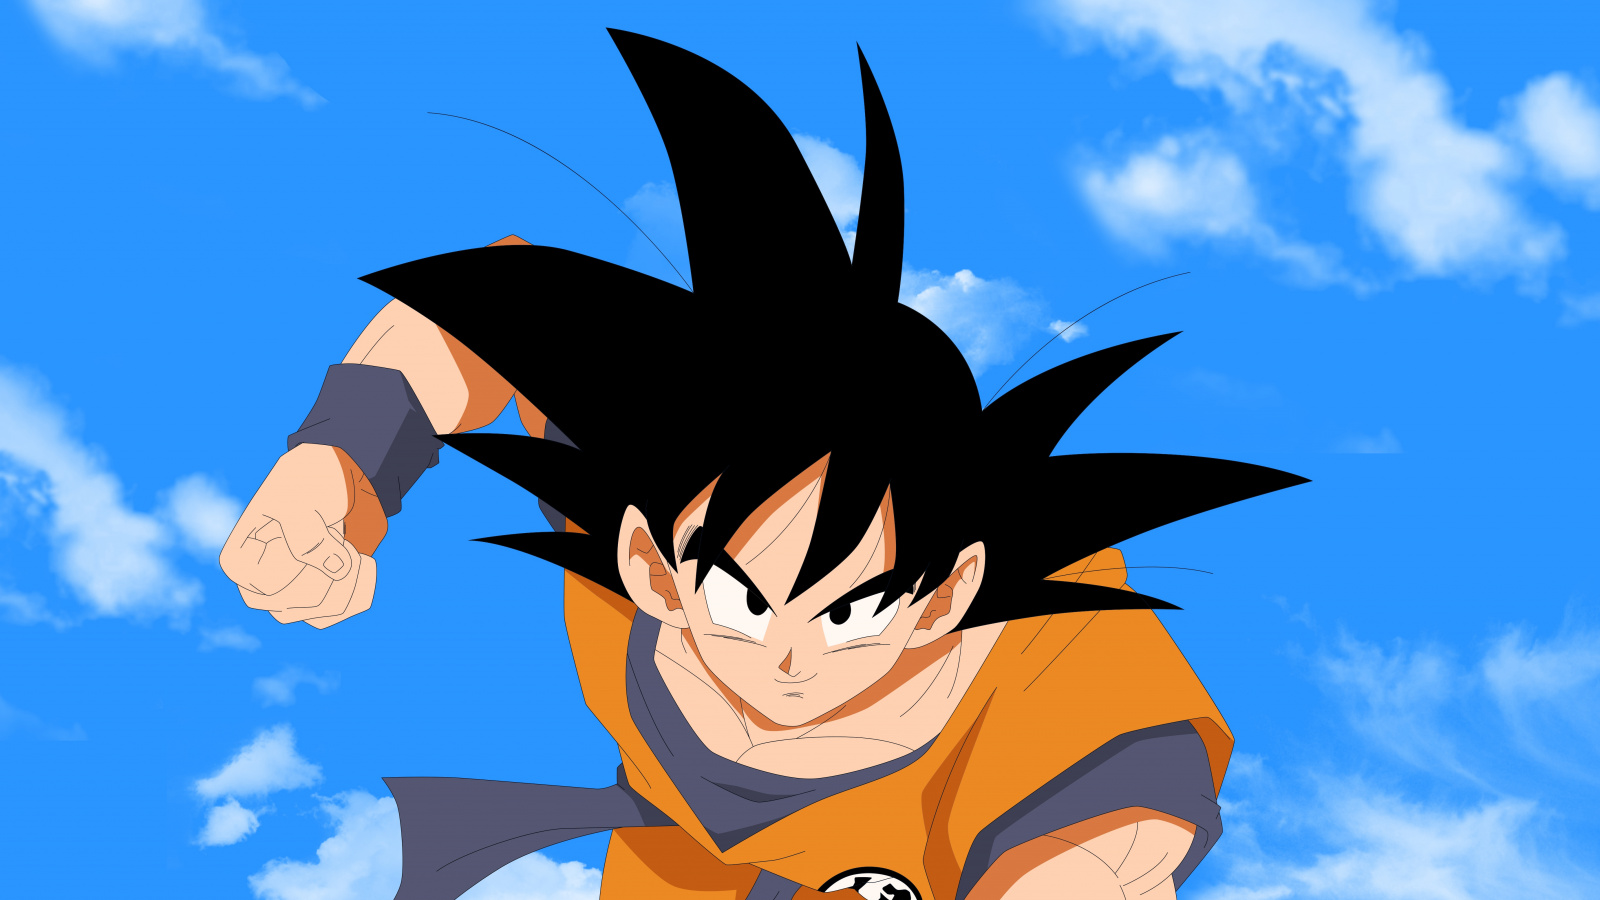 Download Goku, dark hair, anime boy, artwork, anime wallpaper, 1600x Widescreen 16: Widescreen